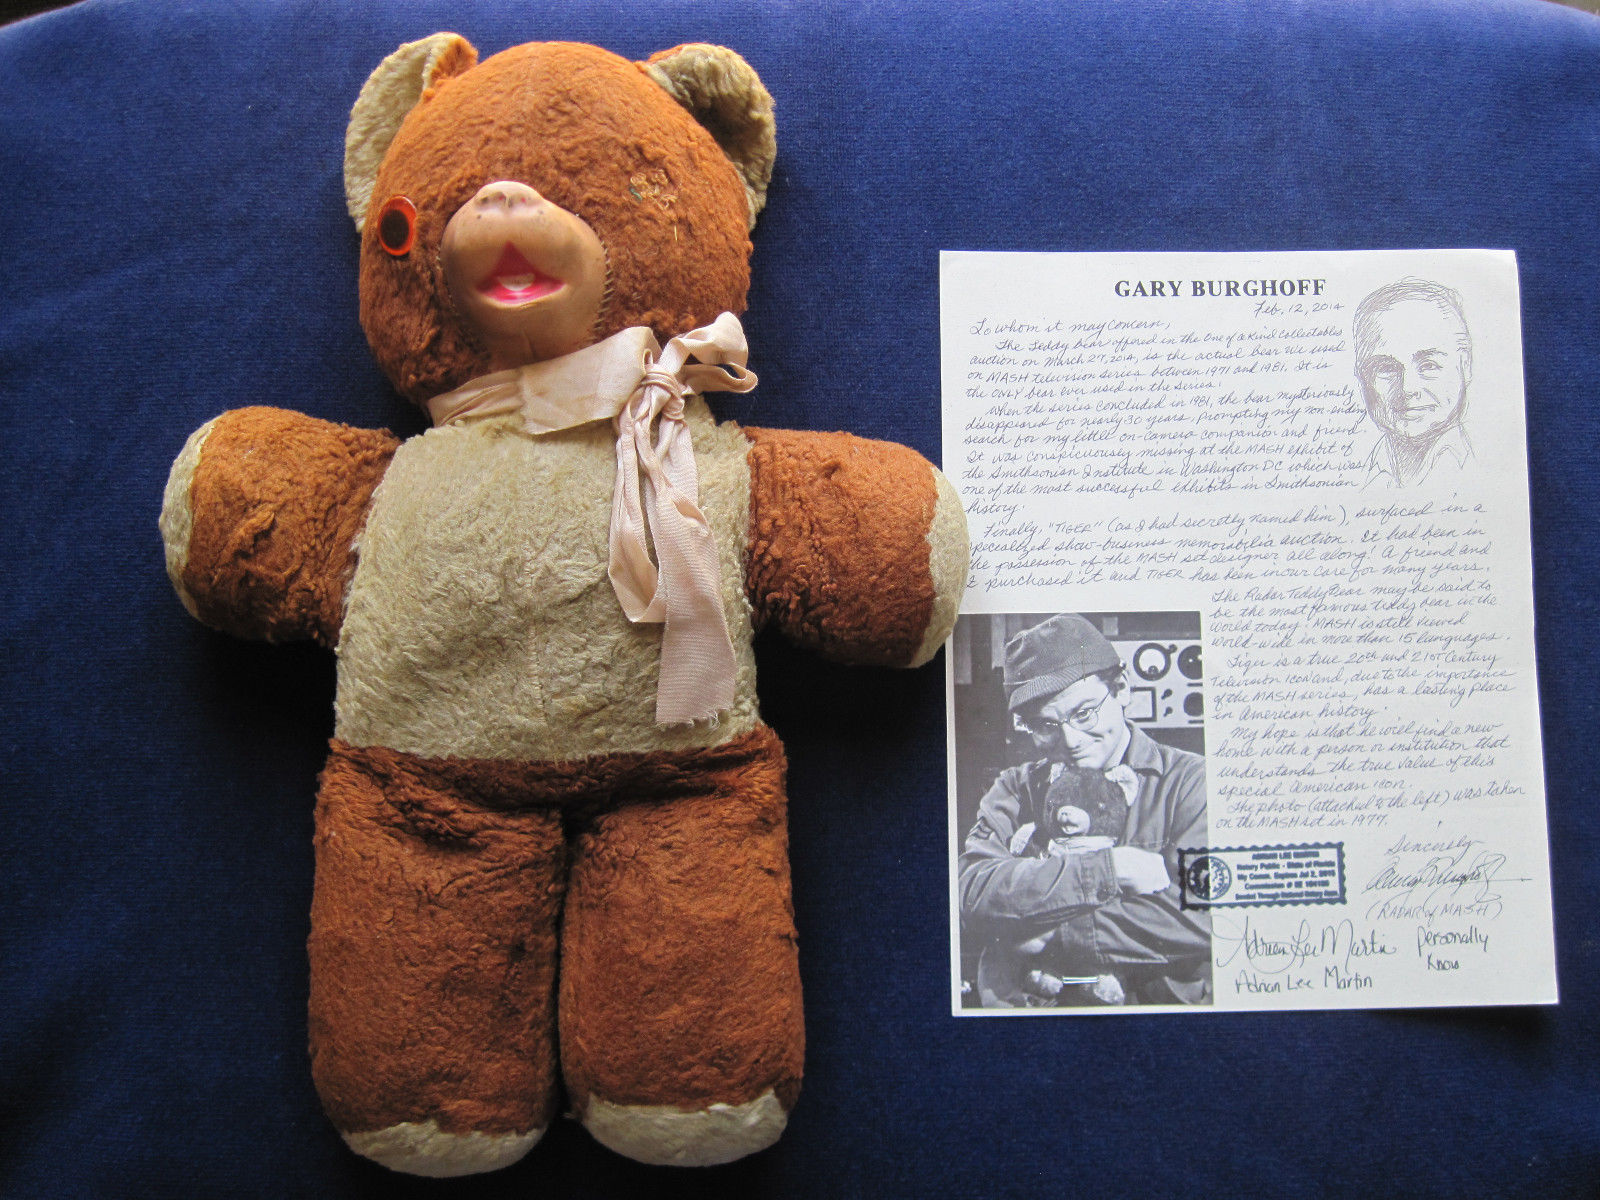 GARY BURGHOFF RADAR'S ORIGINAL TEDDY BEAR 'TIGER' Used on MASH TV SERIES wi Doc.